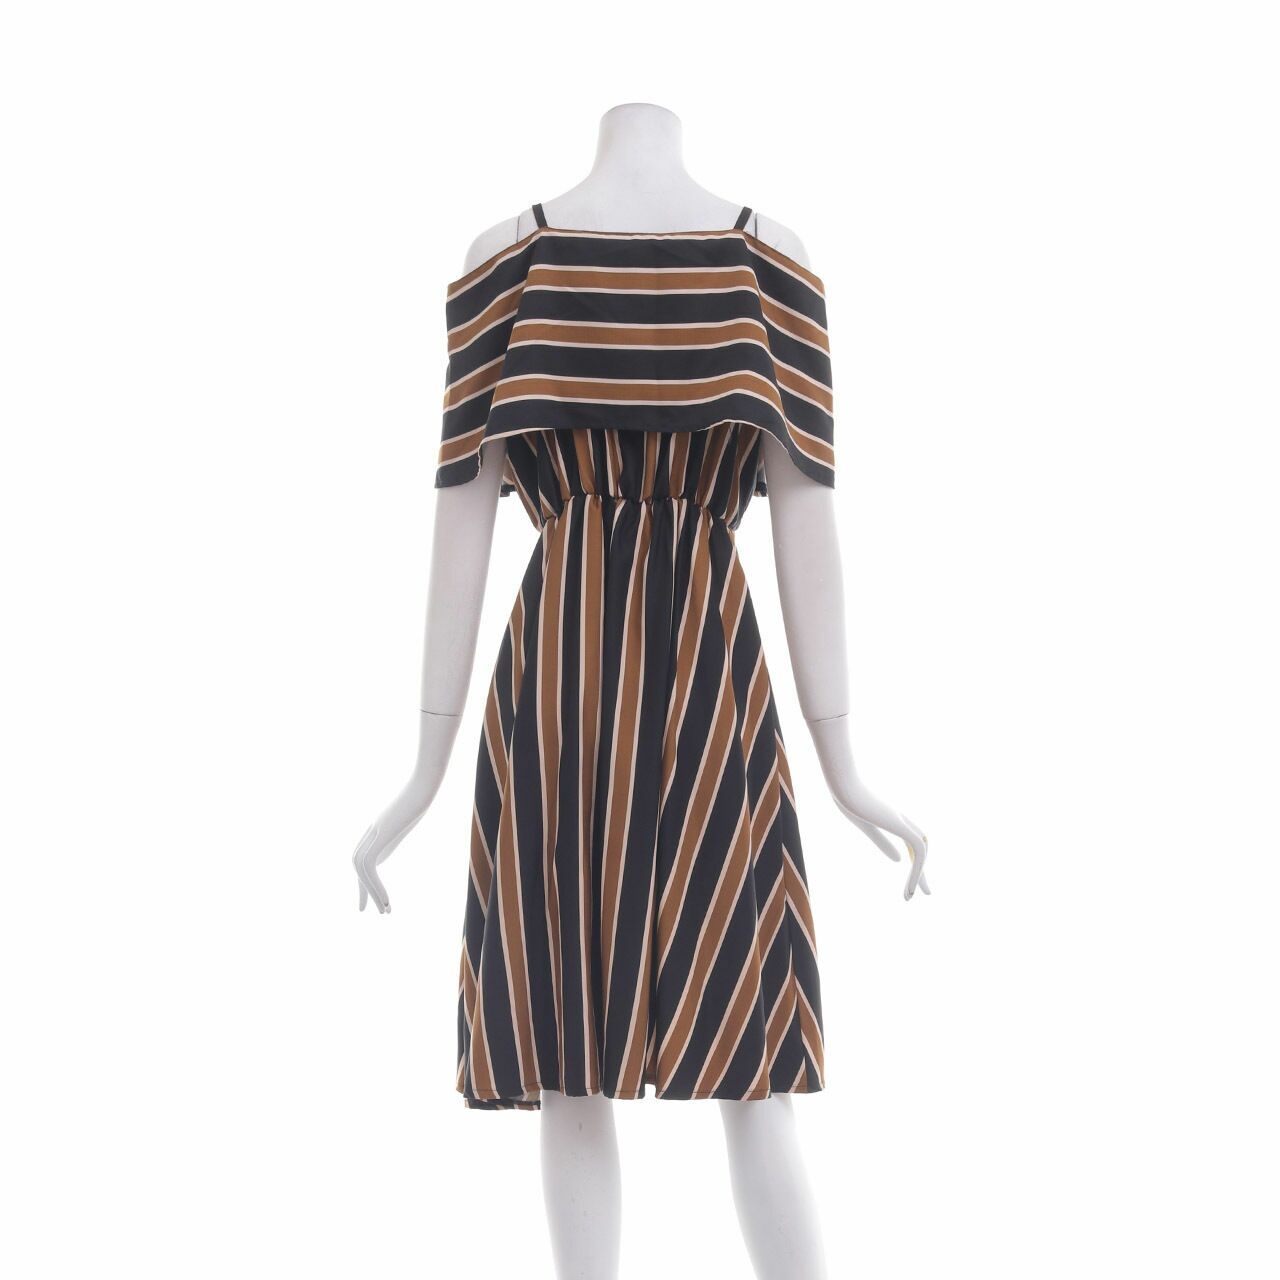 Morningsol Multi Stripes Cold Shoulder Mini Dress